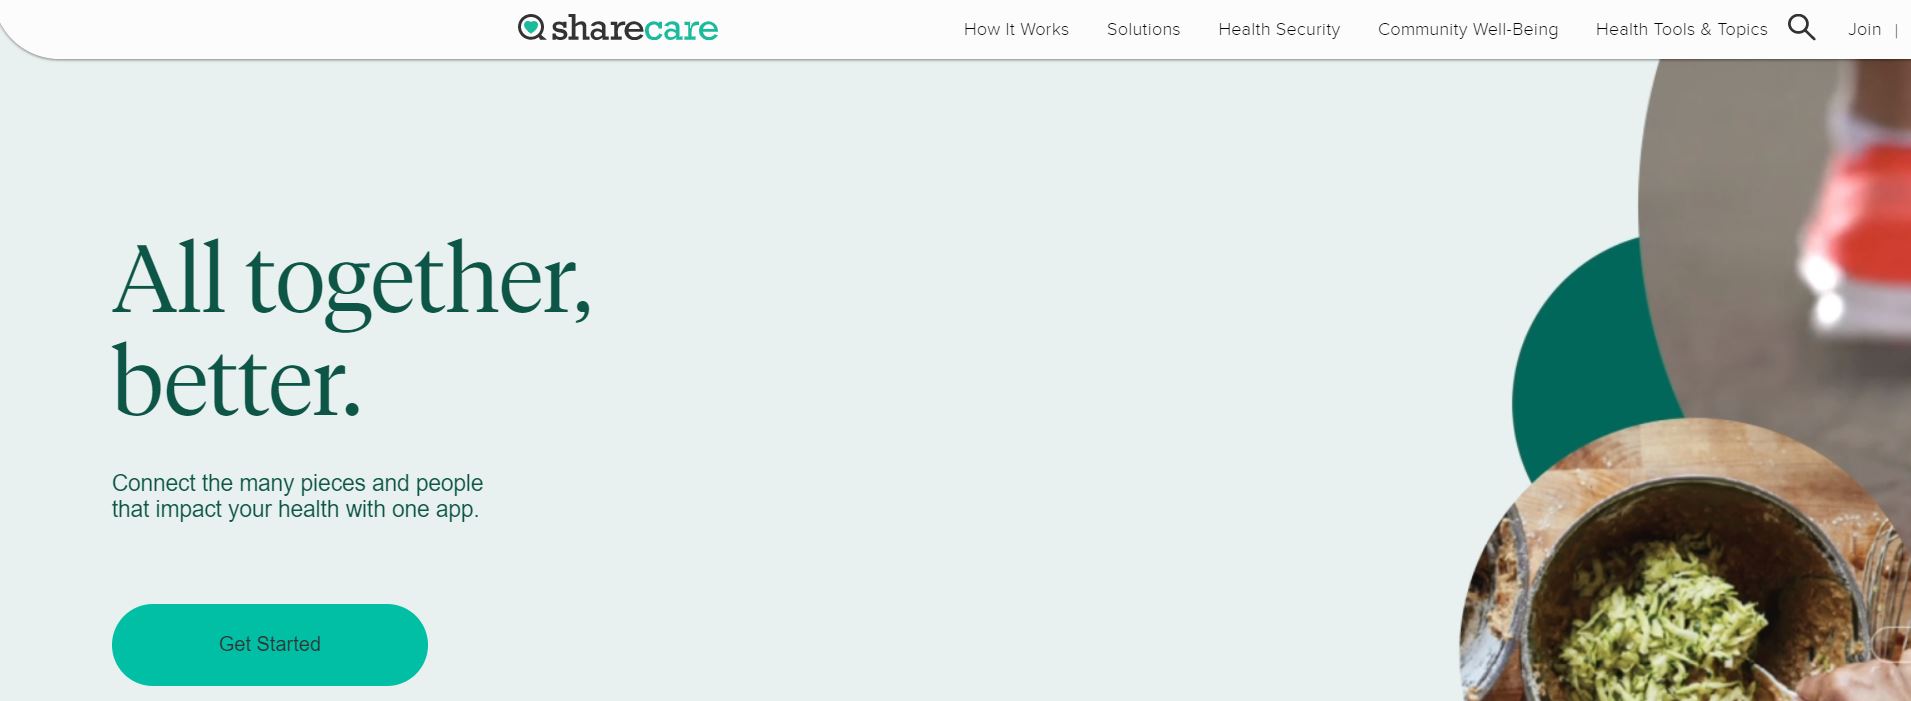 Screenshot of the homepage of the healthcare company Sharecare